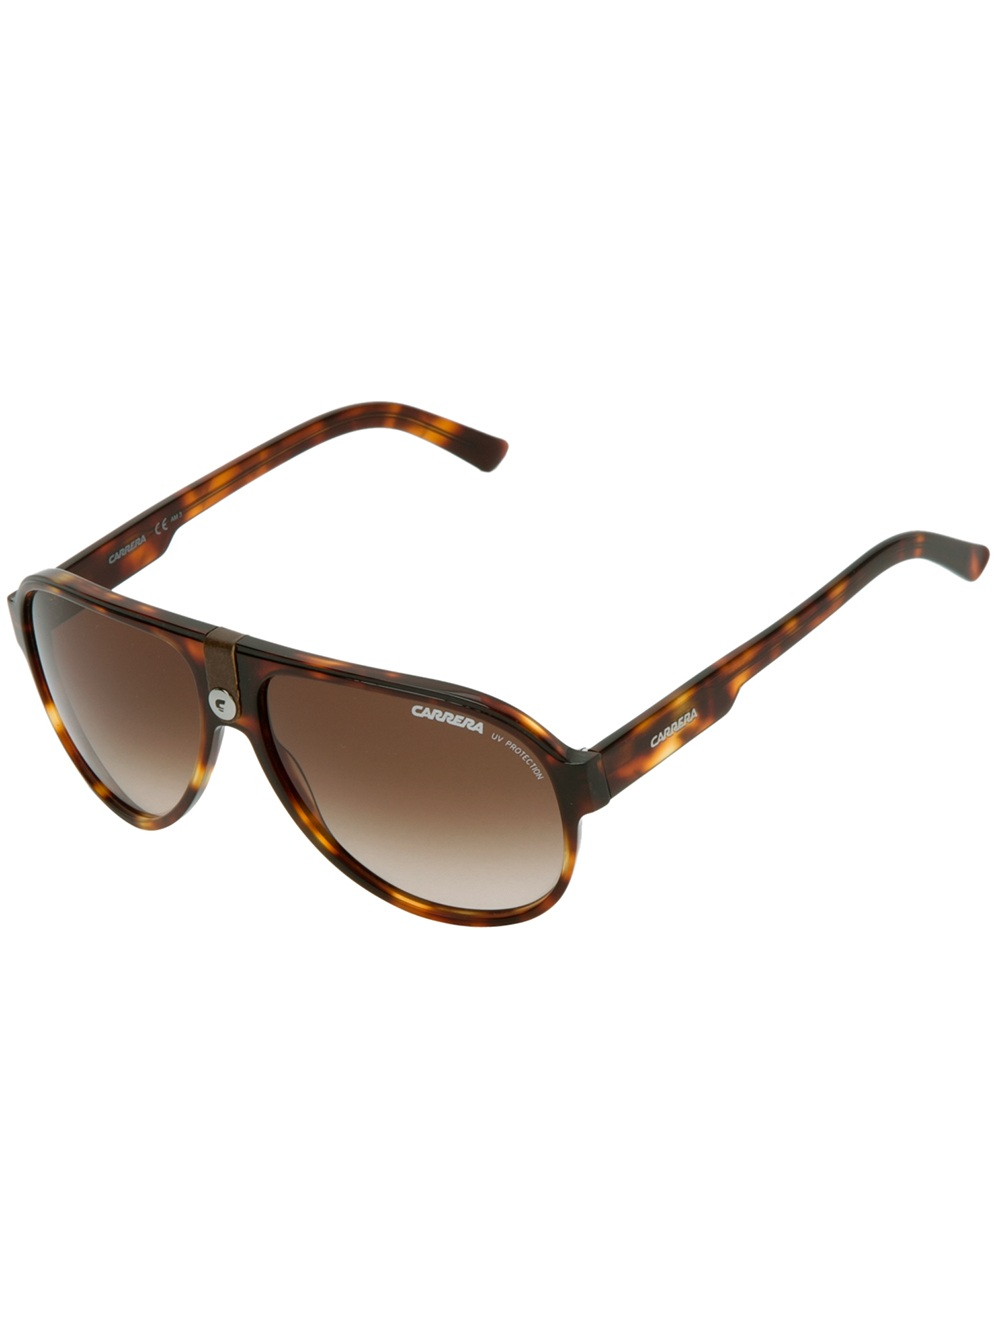 Carrera Tortoise Shell Sunglasses In Brown For Men Lyst